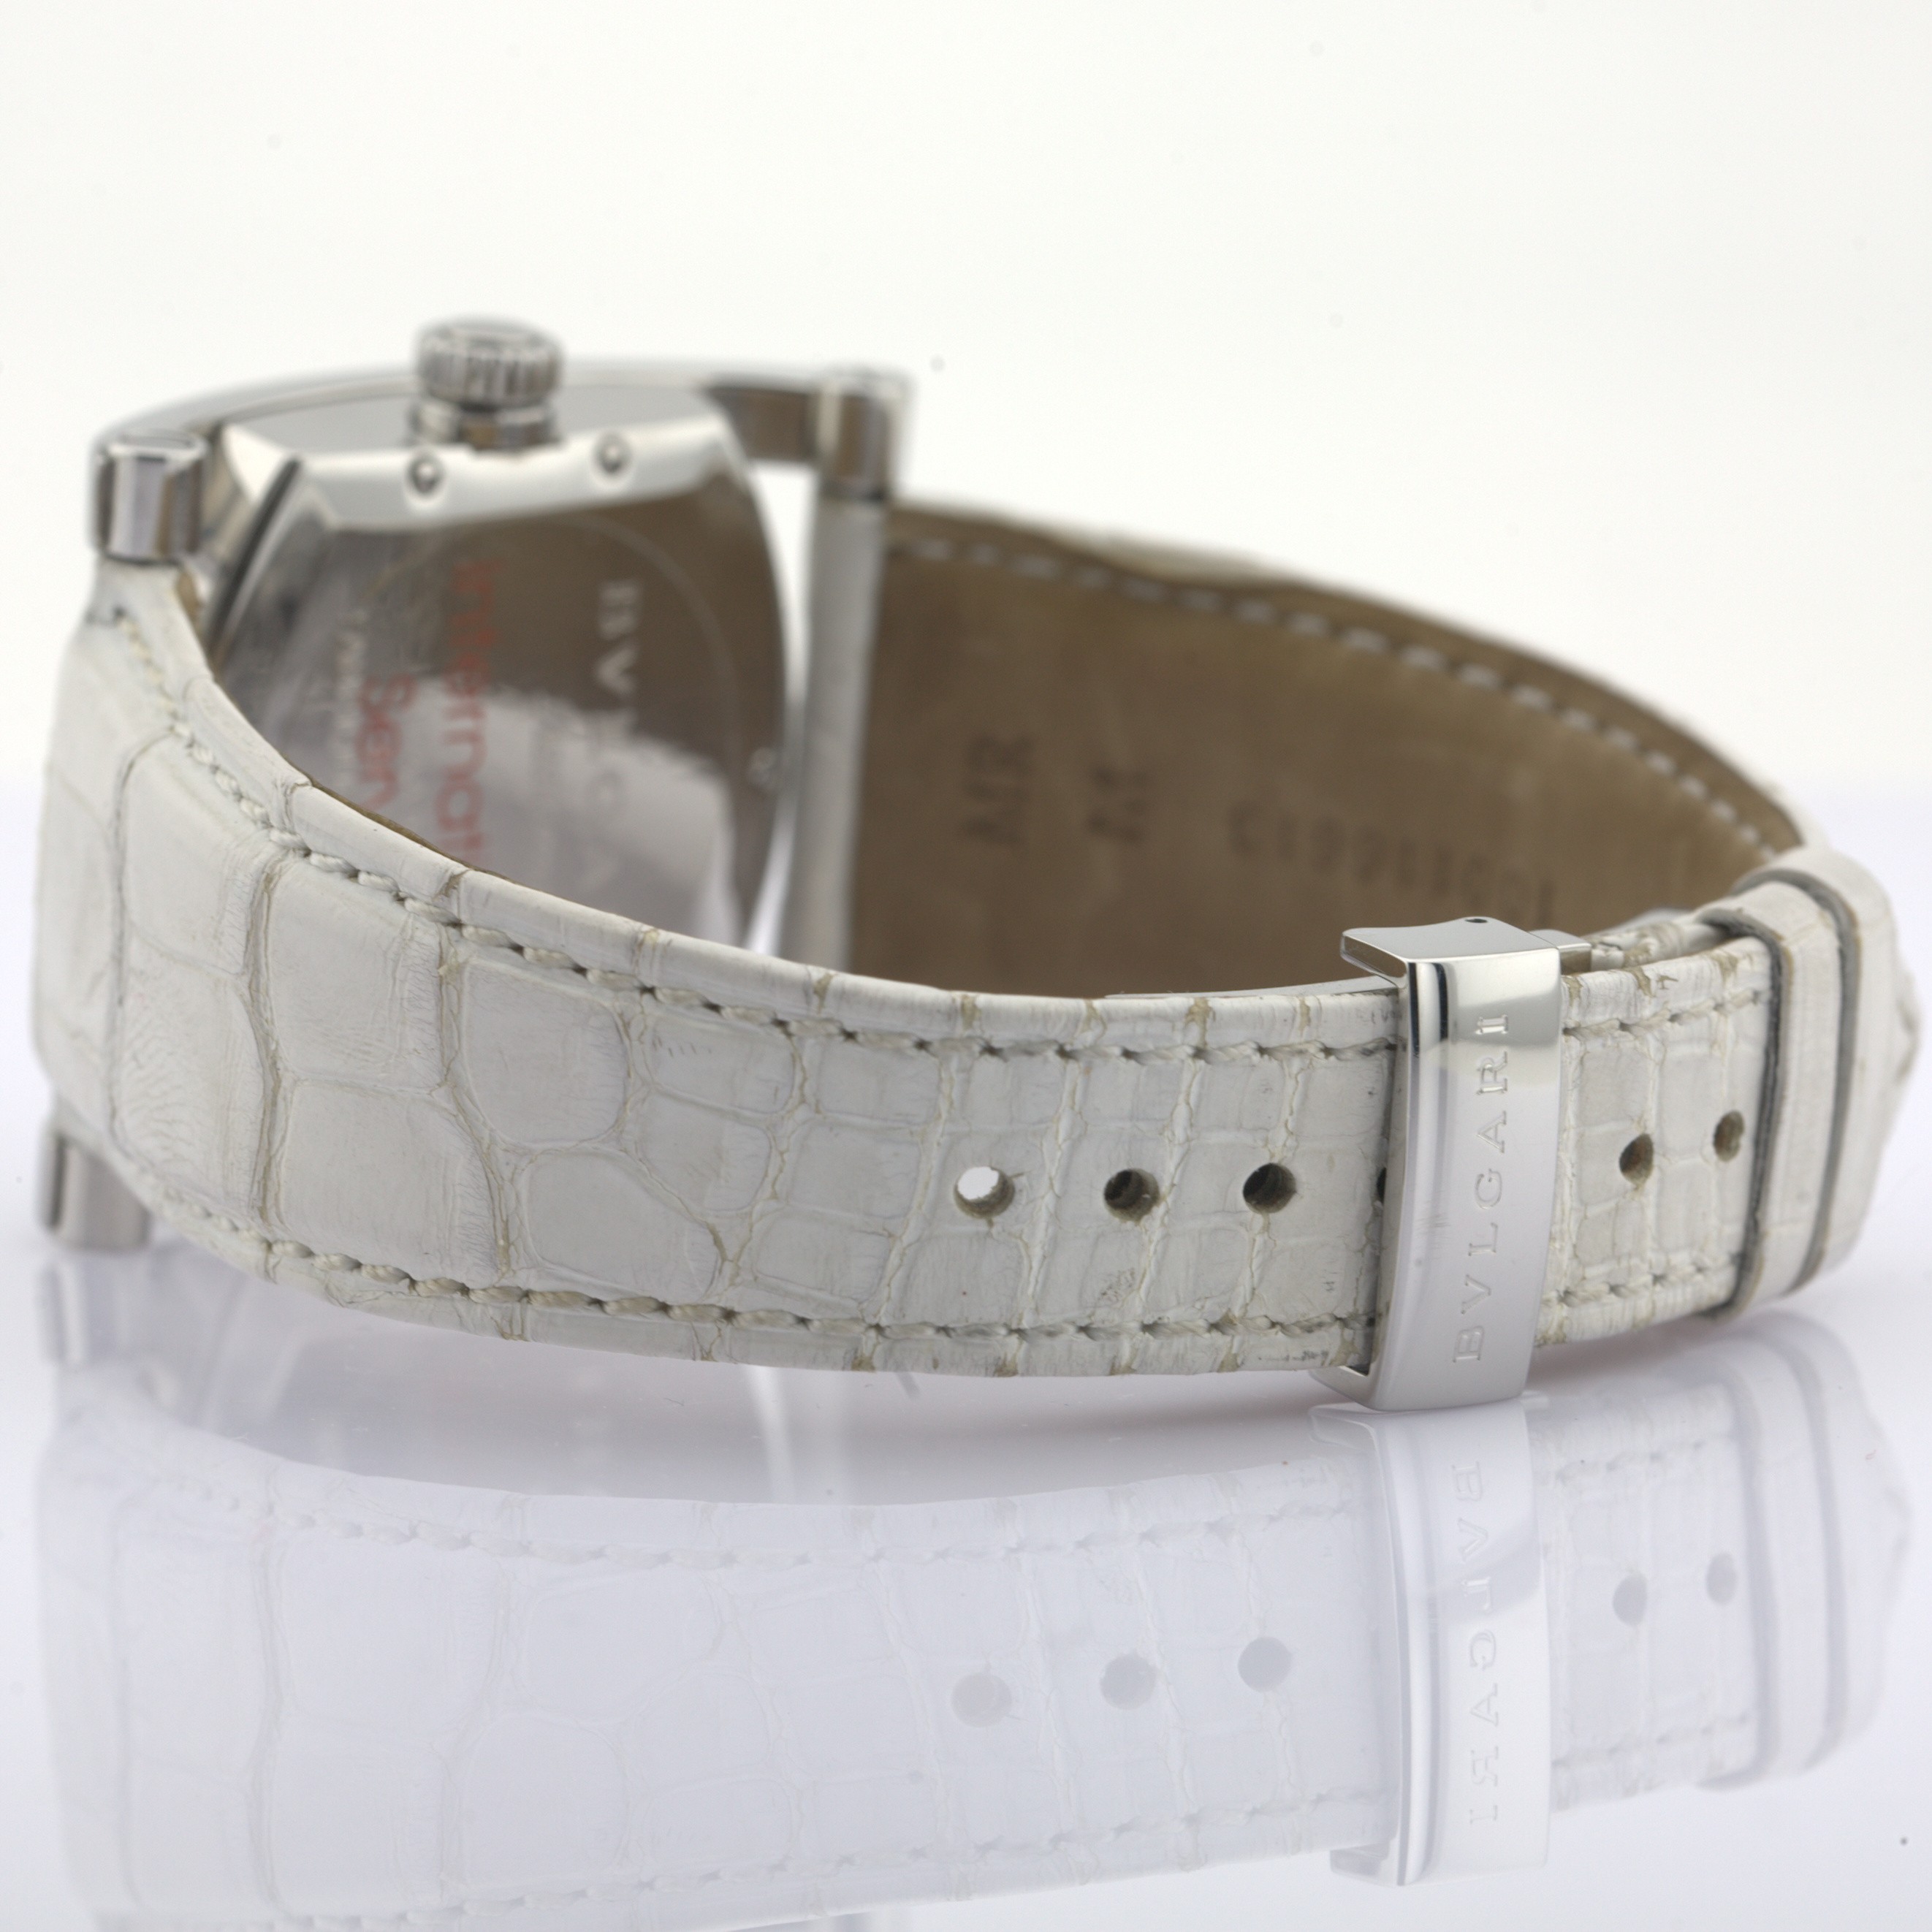 Bvlgari / AA44S Diamond - Gentlmen's Steel Wrist Watch - Image 9 of 9